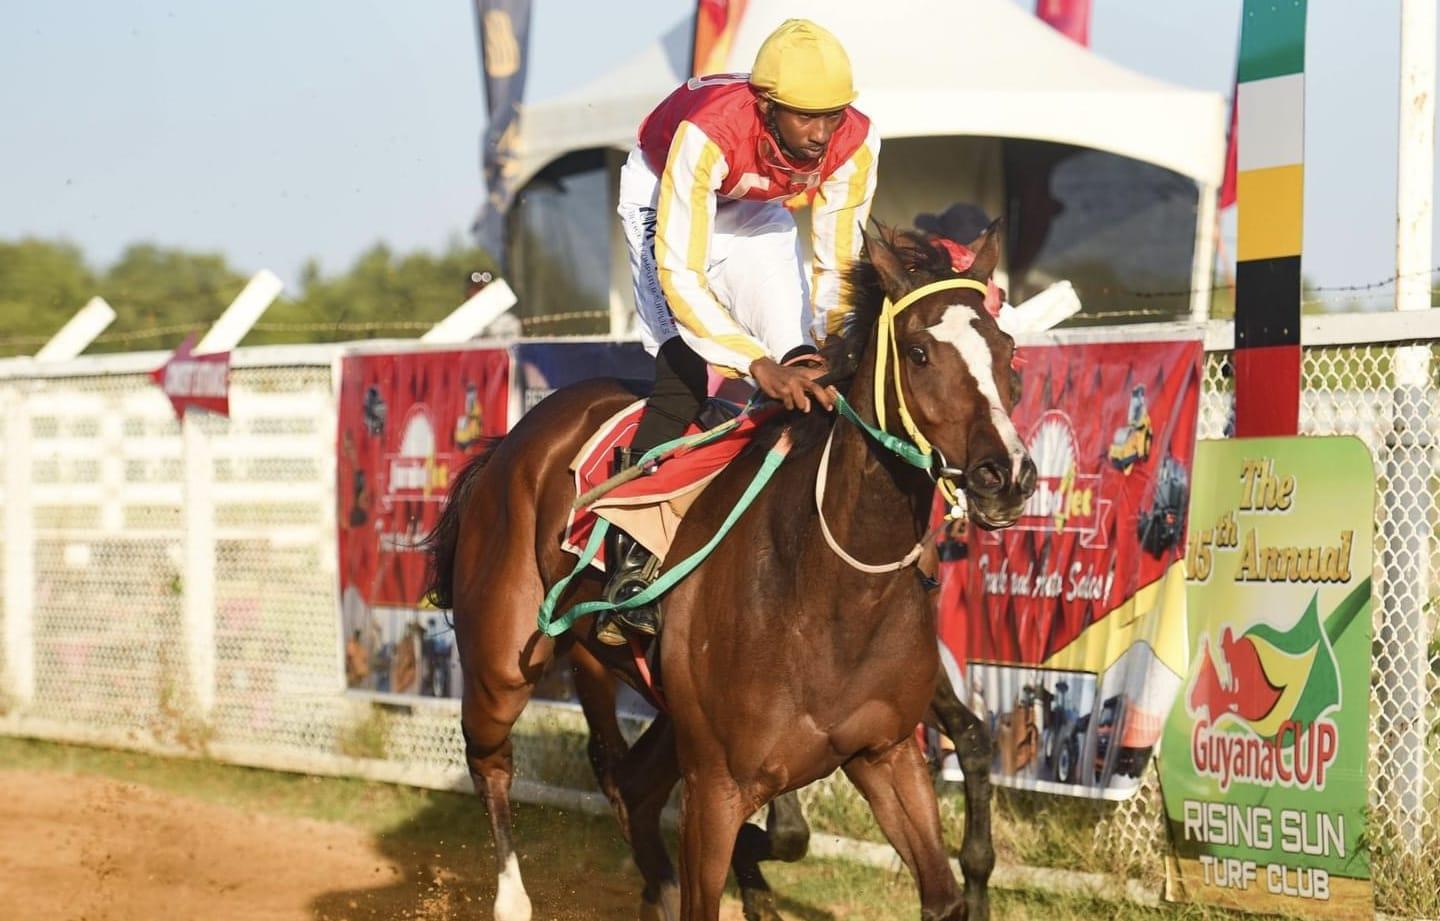 Guyana’s champion Jockey Colin Ross has his eyes on winning the prize.